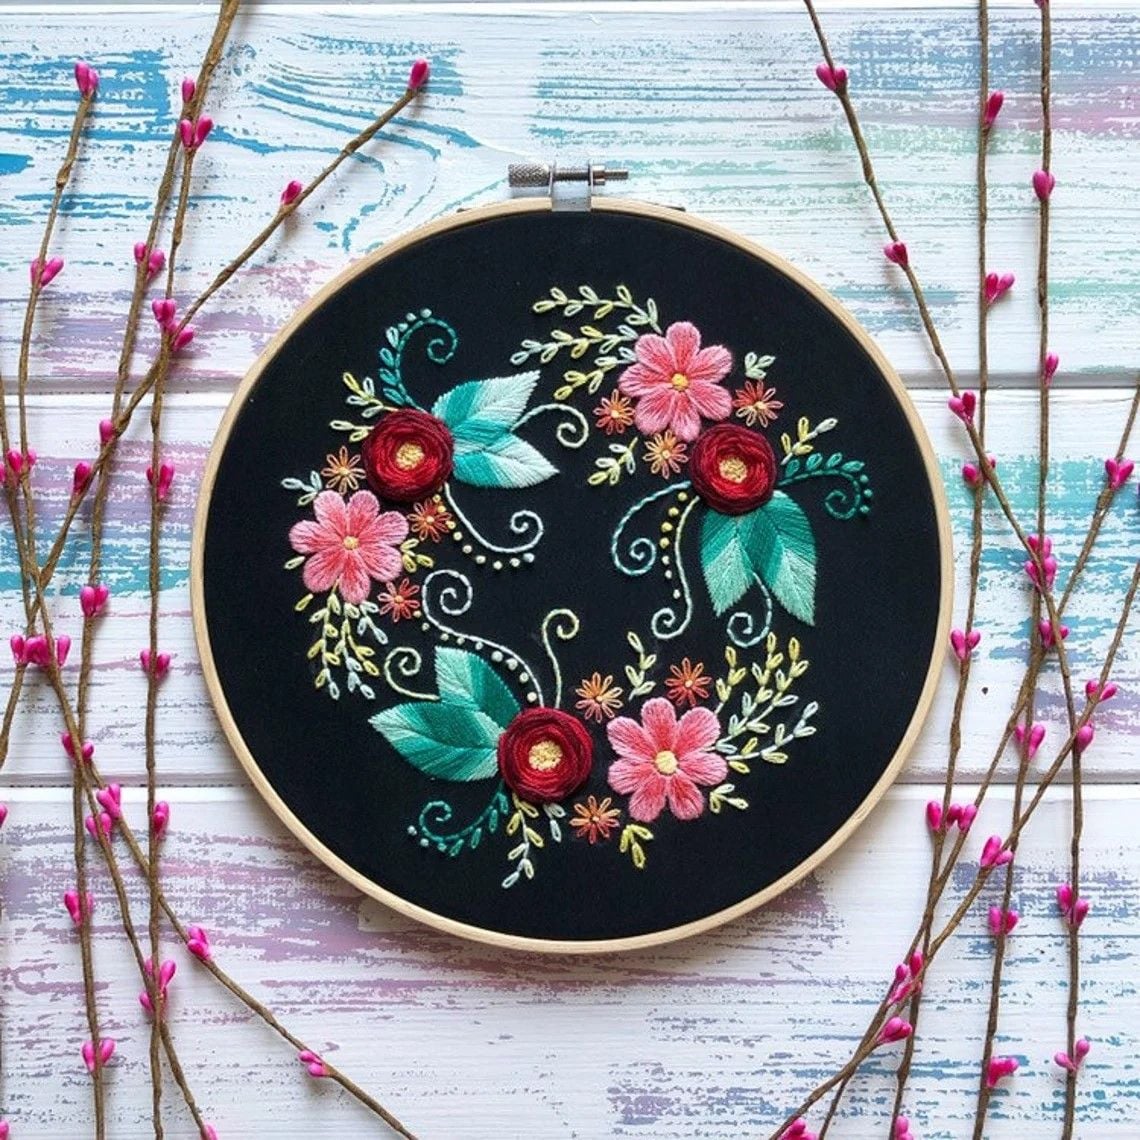 Floral Stitchwork by Esty seller Natalia from Lviv, Ukraine.